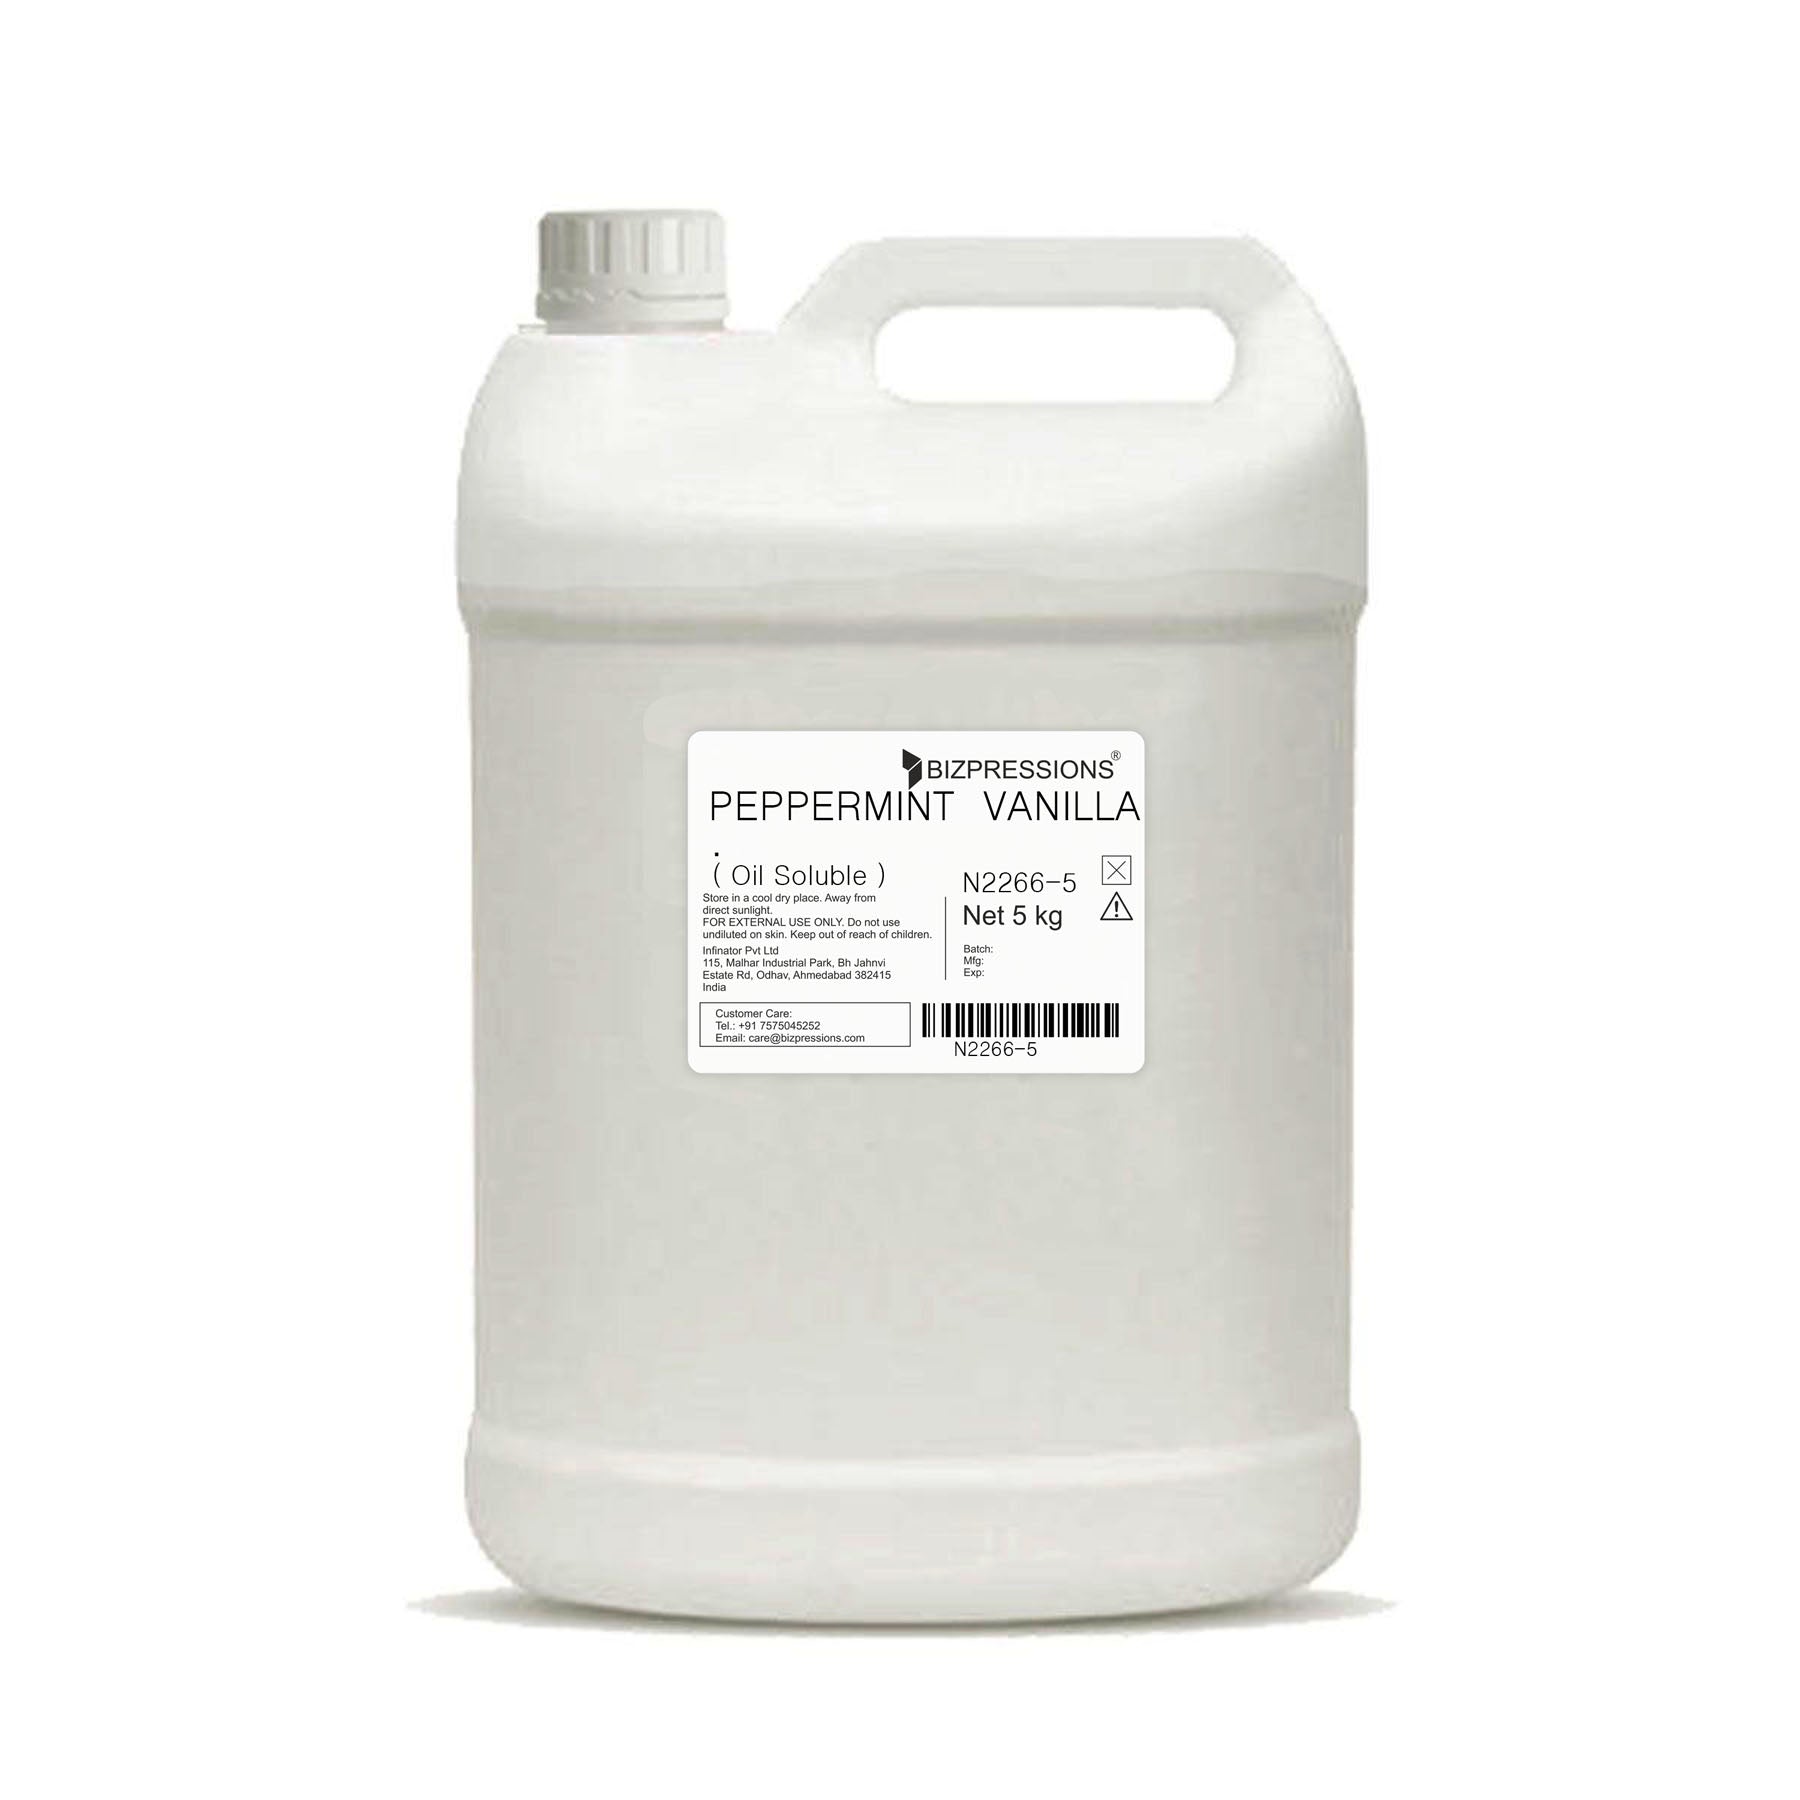 PEPPERMINT VANILLA - Fragrance ( Oil Soluble ) - 5 kg